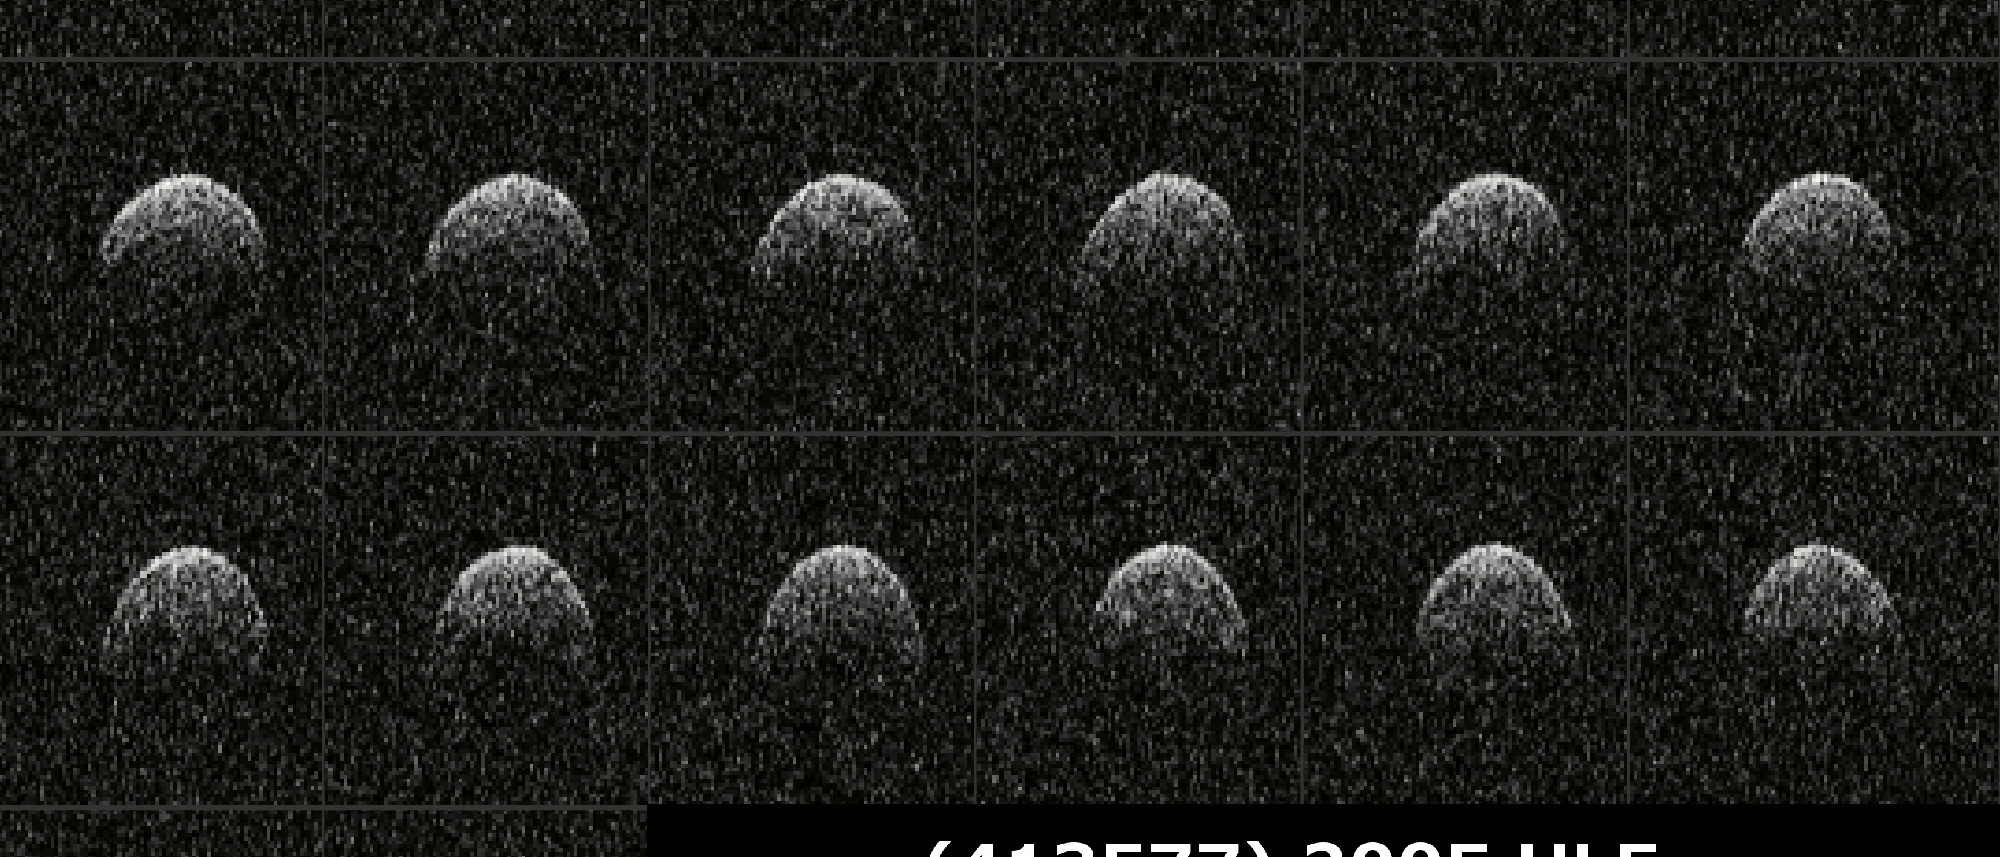 Asteroid 2005 UL5 am 21. November 2015